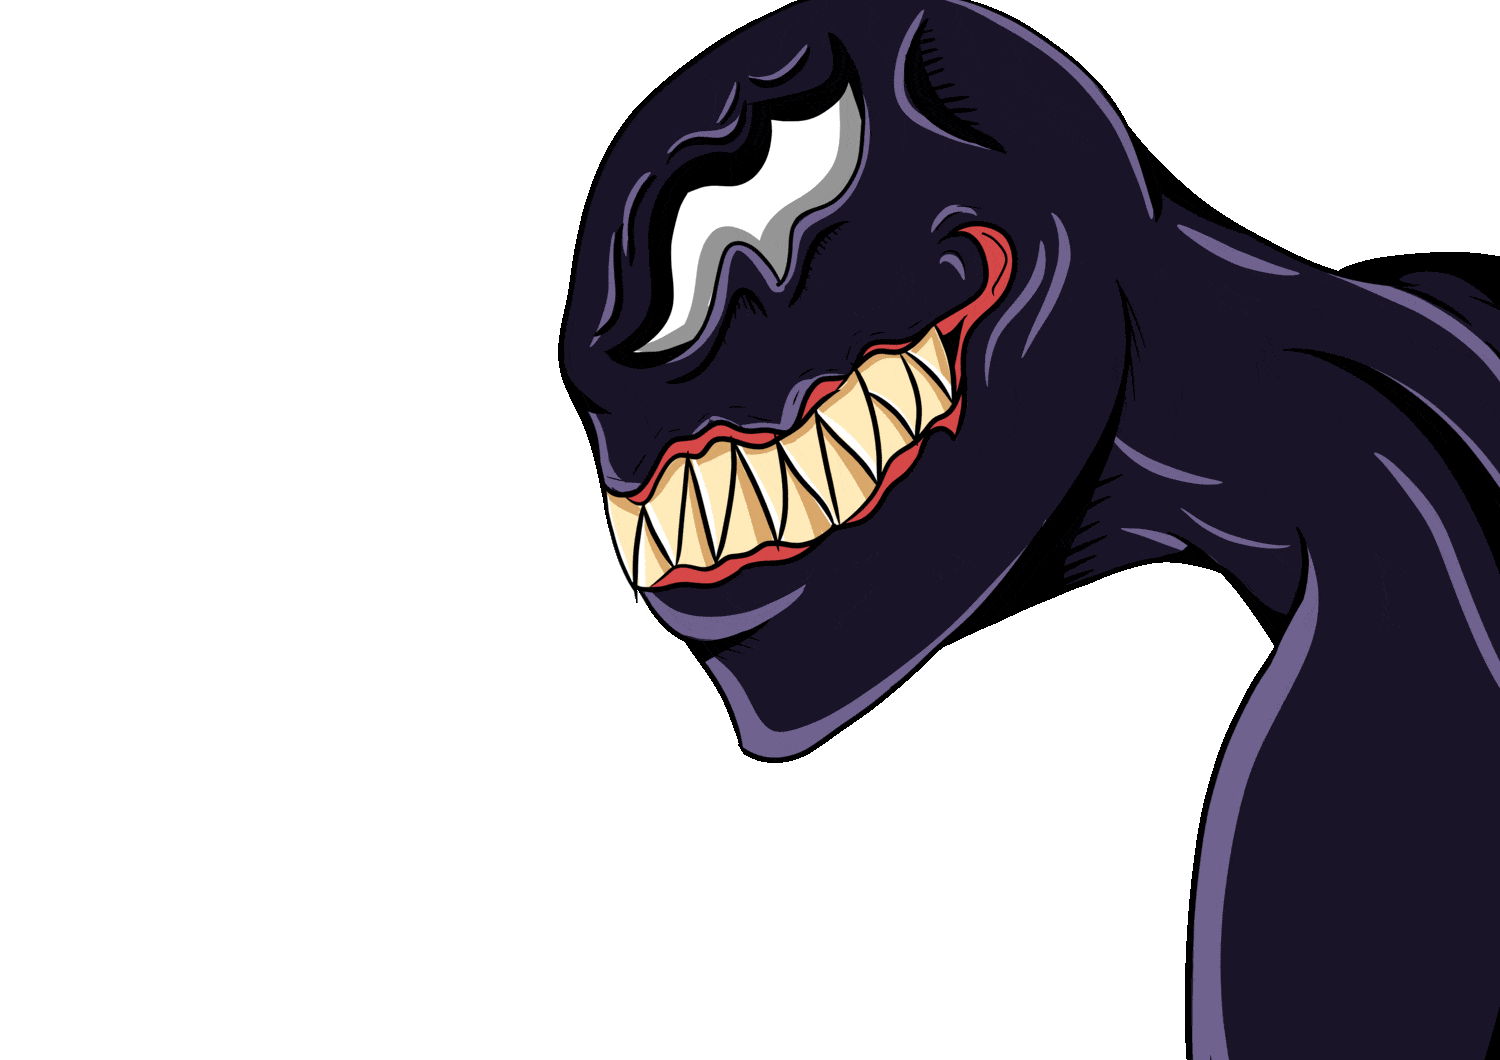 Venom Gif - GIFcen